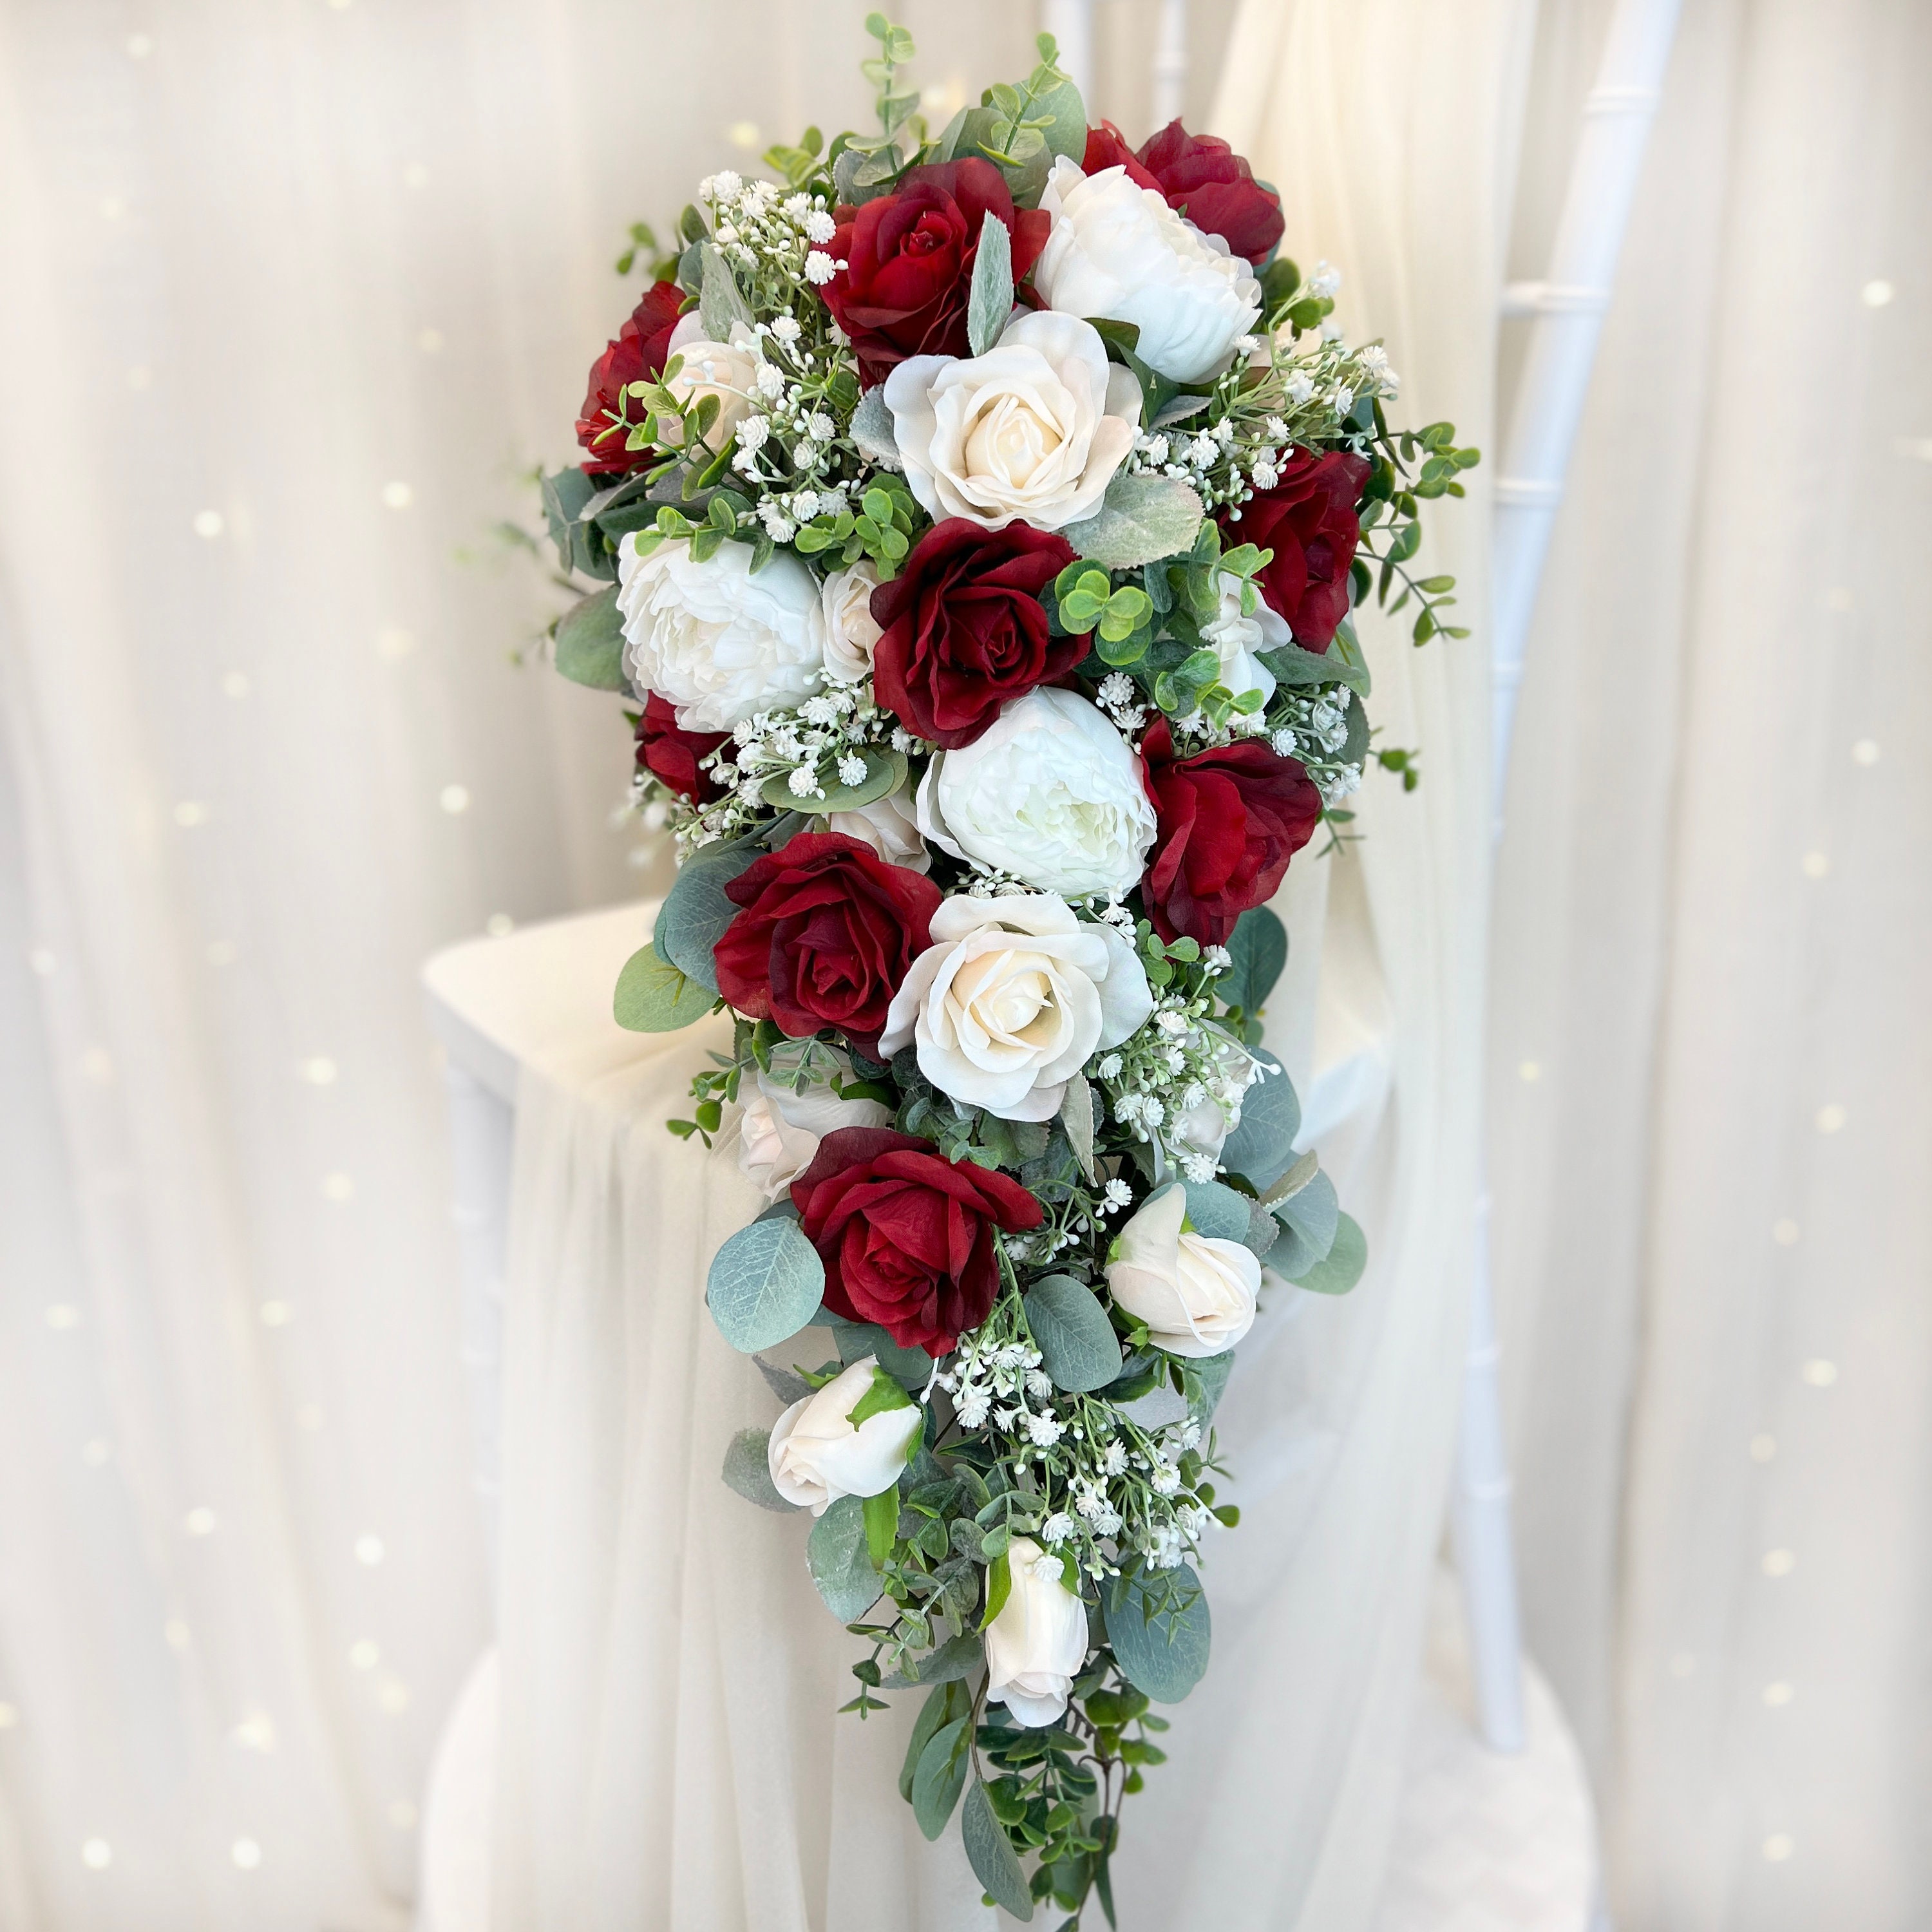 xllLU Wedding Waterfall Bridal Bouquet Water Drop Style Artificial